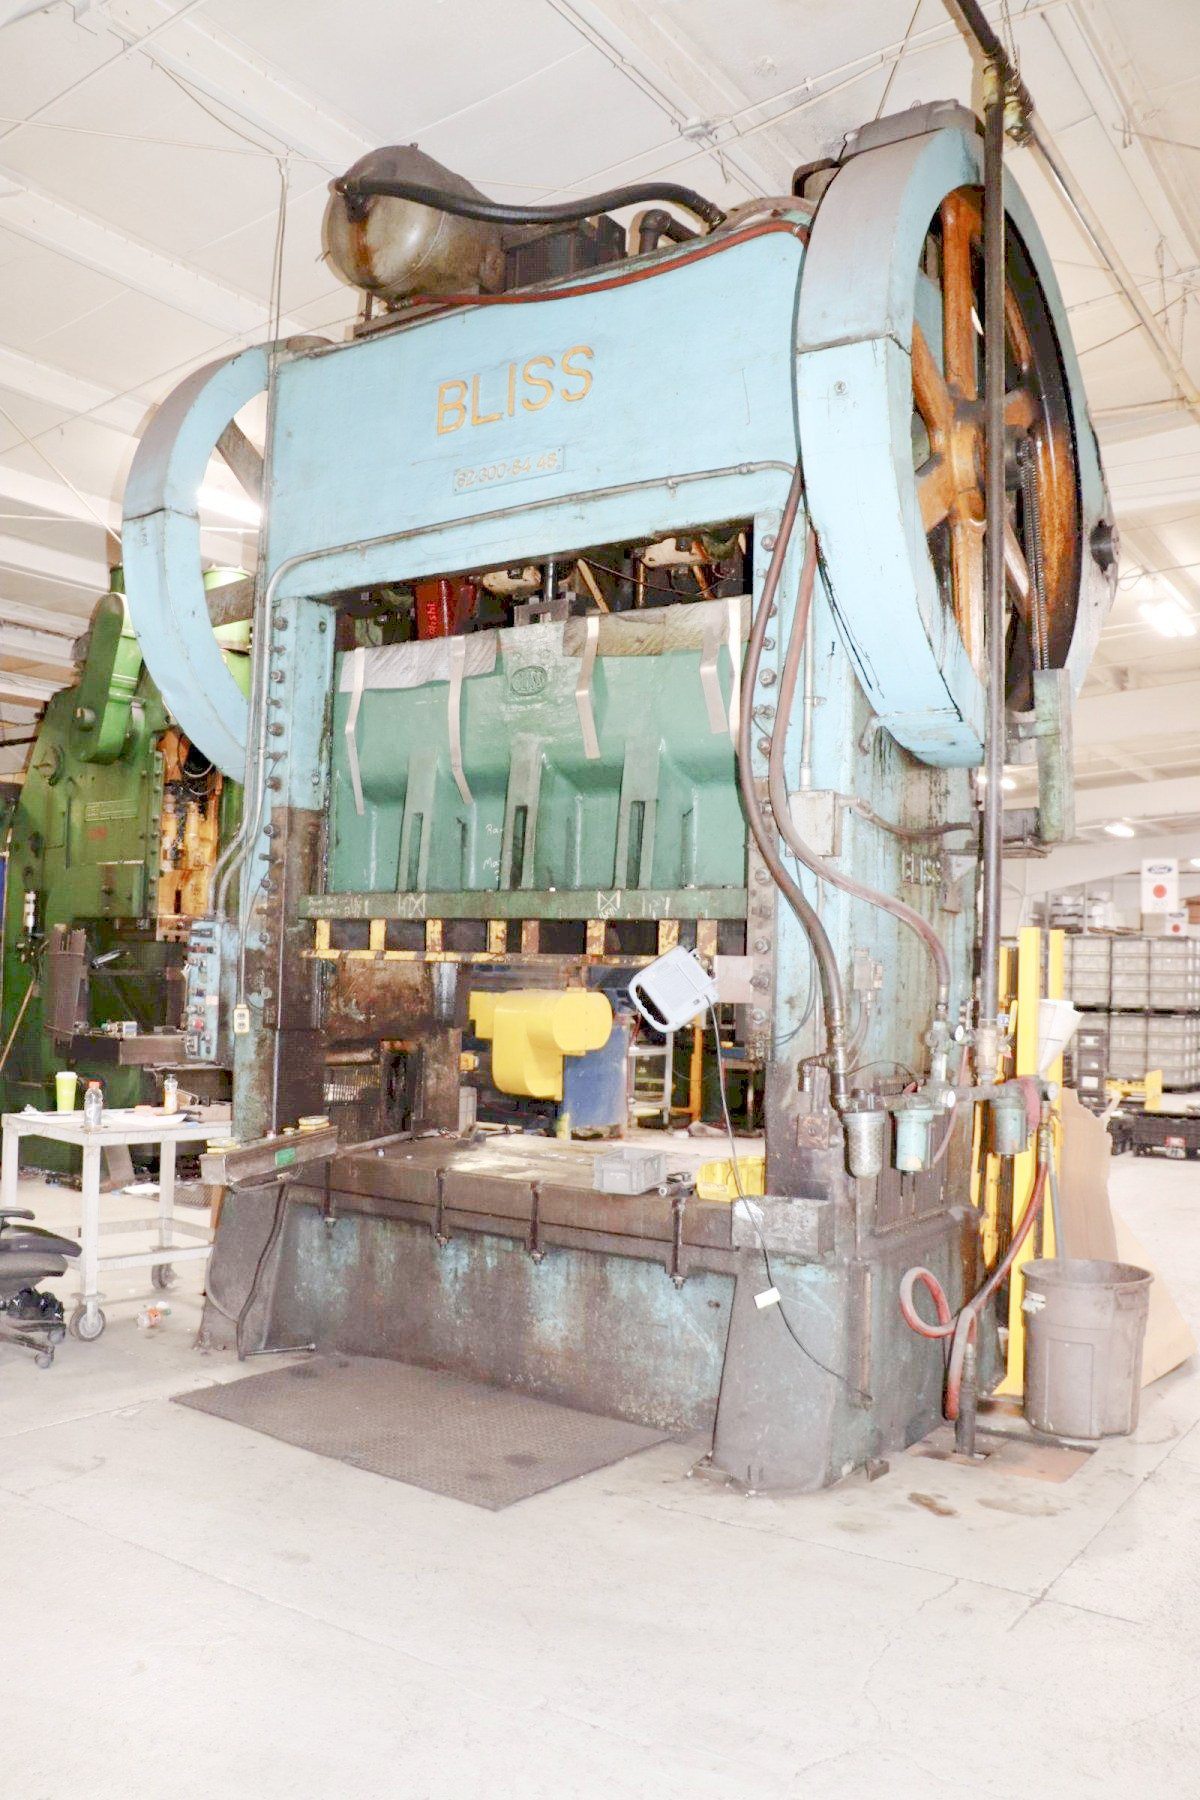 Bliss Model S2-300 SSDC Press (used) Item # UE-020422D (Ohio)